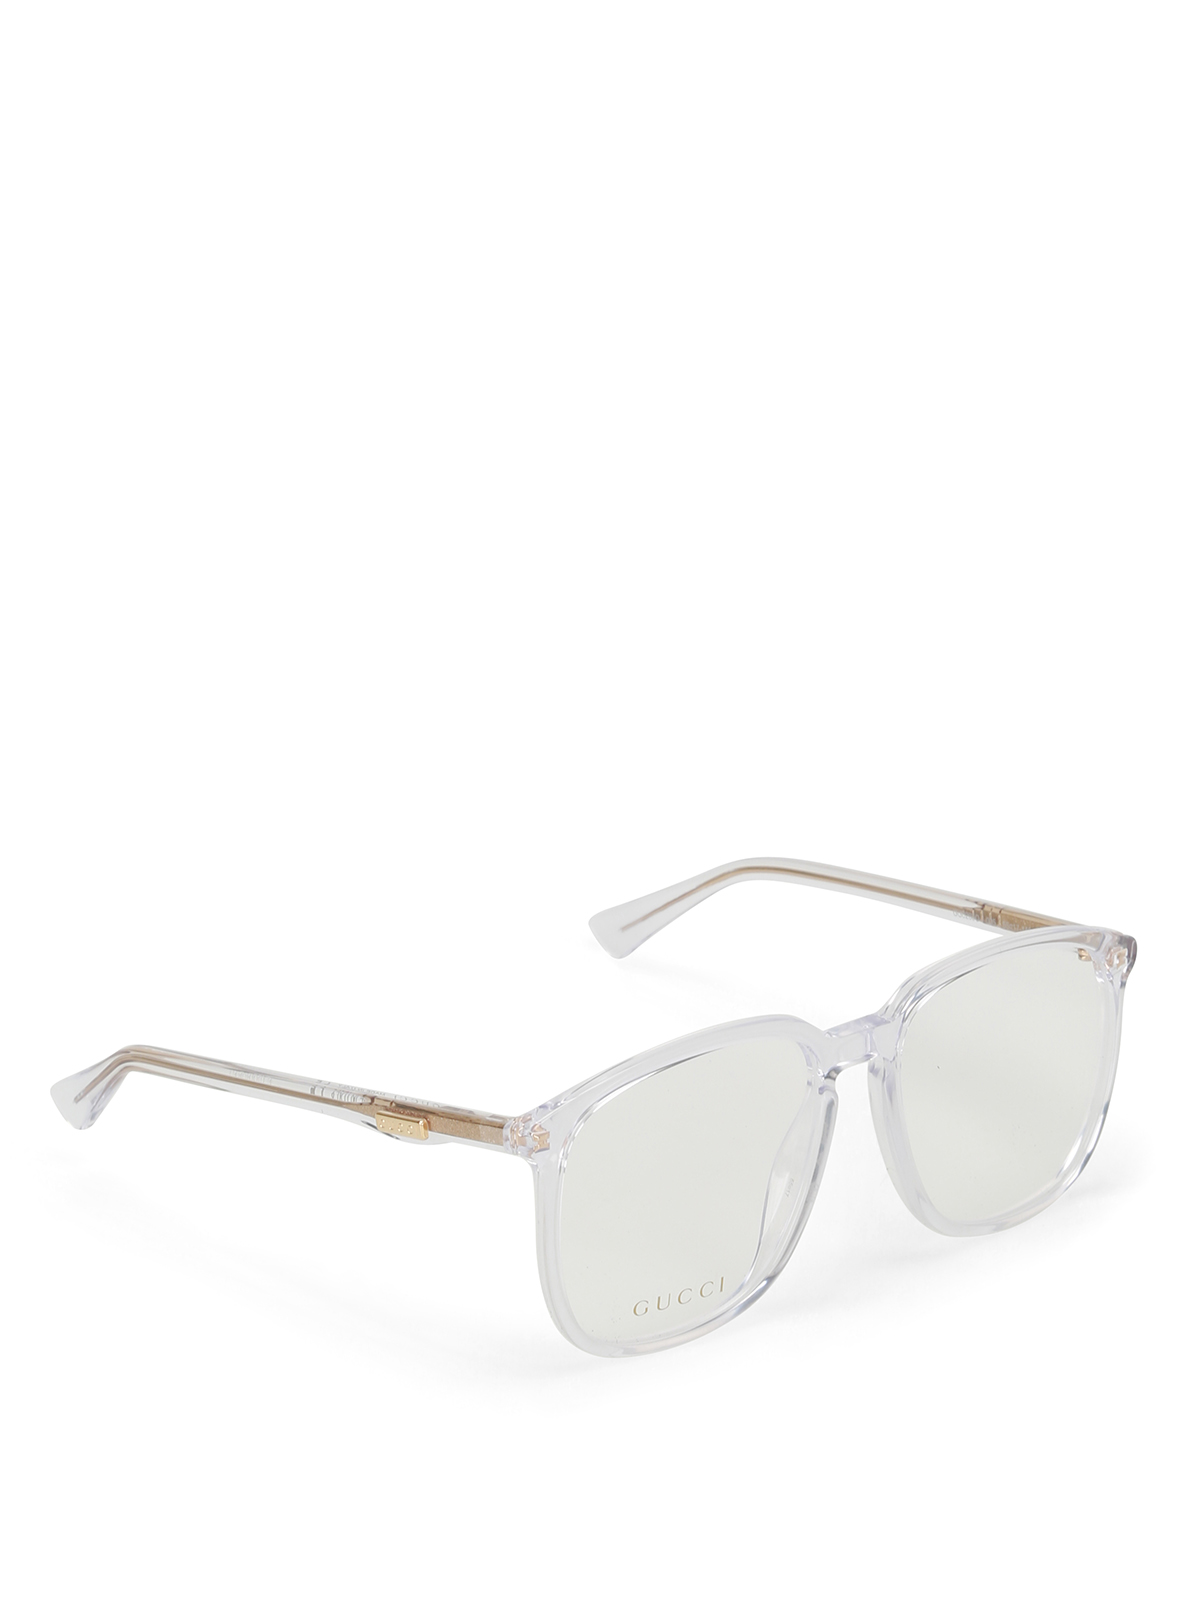 Glasses Gucci - Transparent optical glasses - GG0265O005